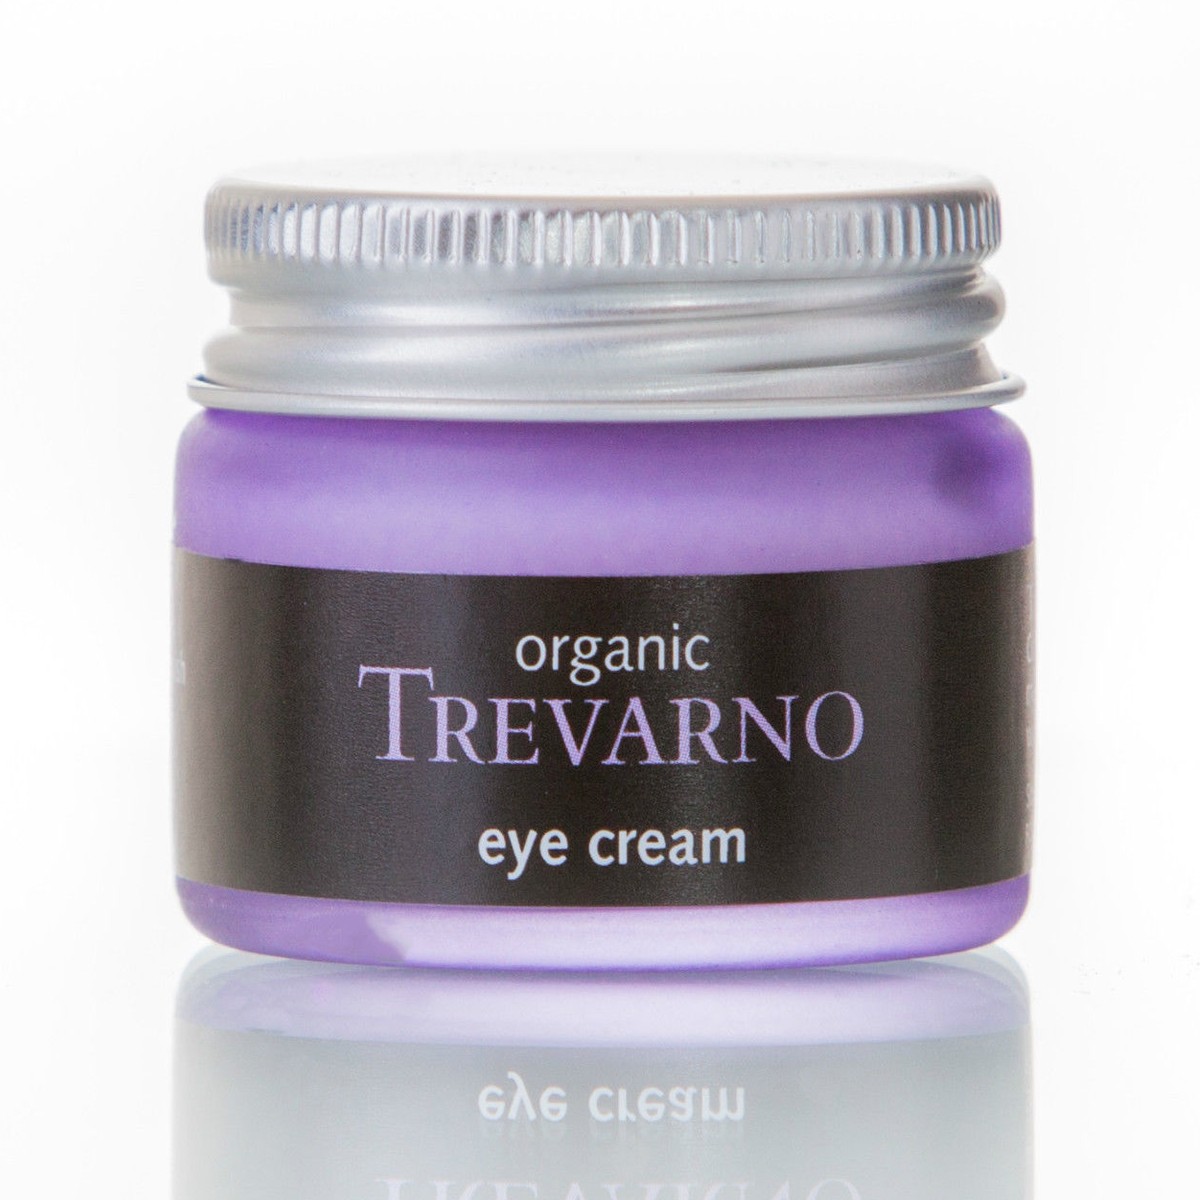 Organic Trevarno Eye Cream 